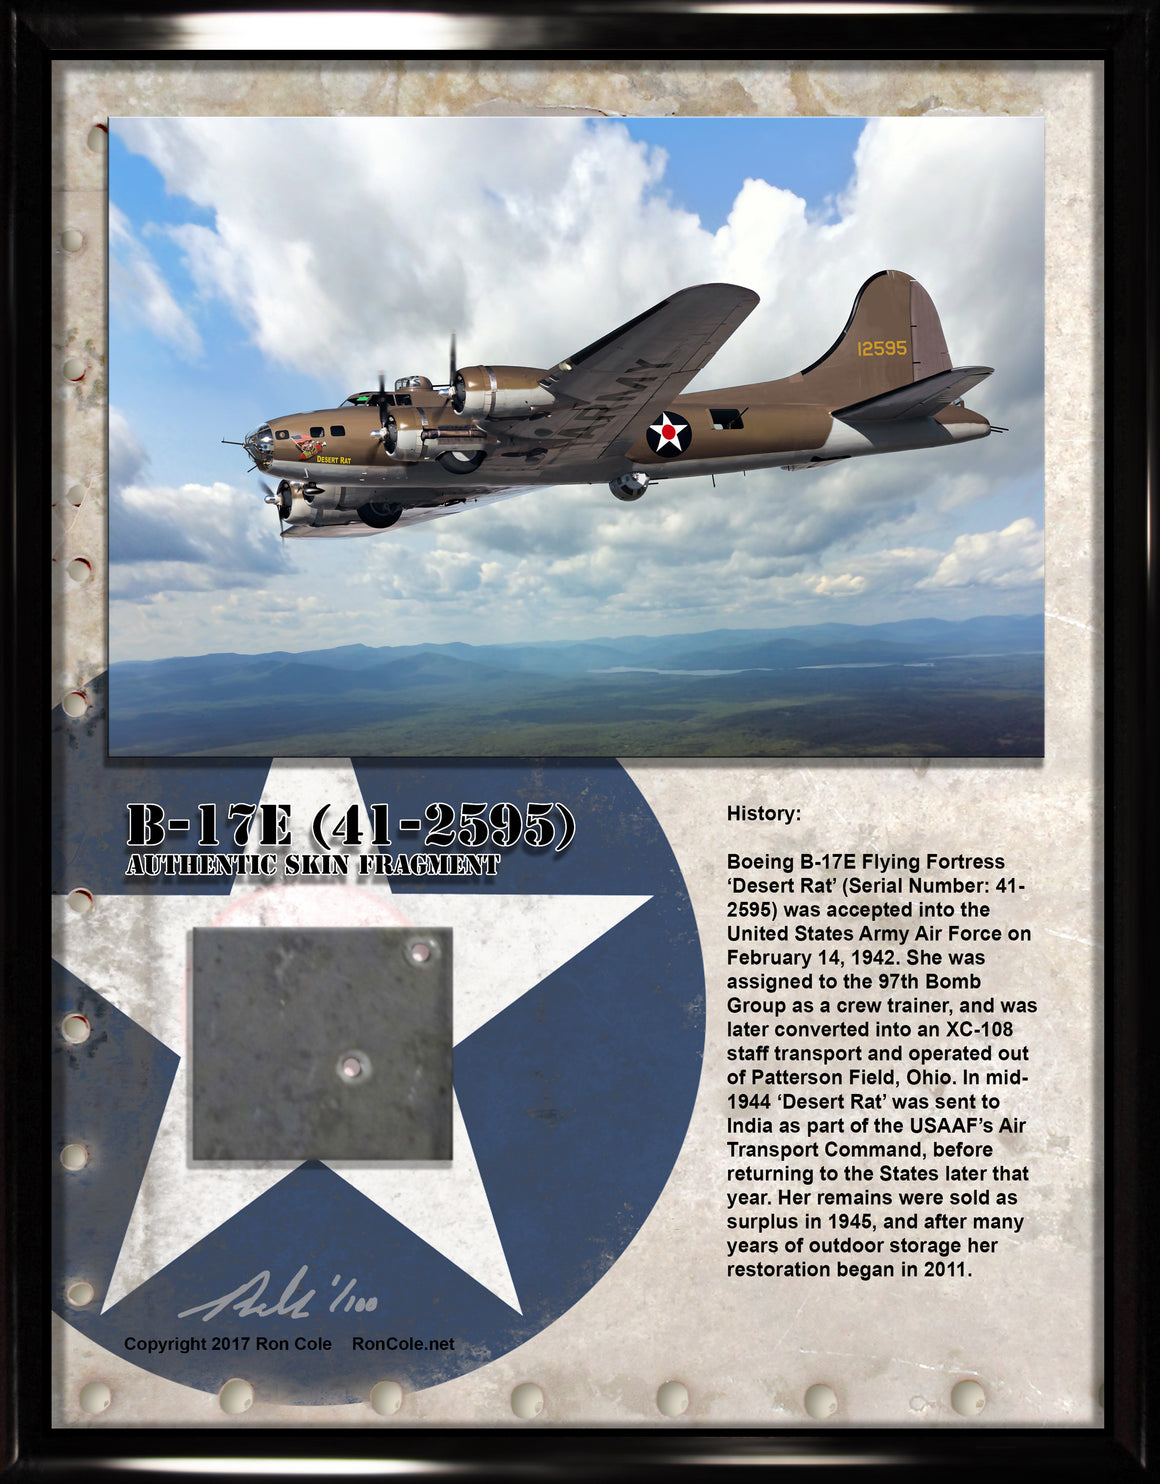 Boeing B-17E Flying Fortress (41-2595) 'Desert Rat' Relic Display